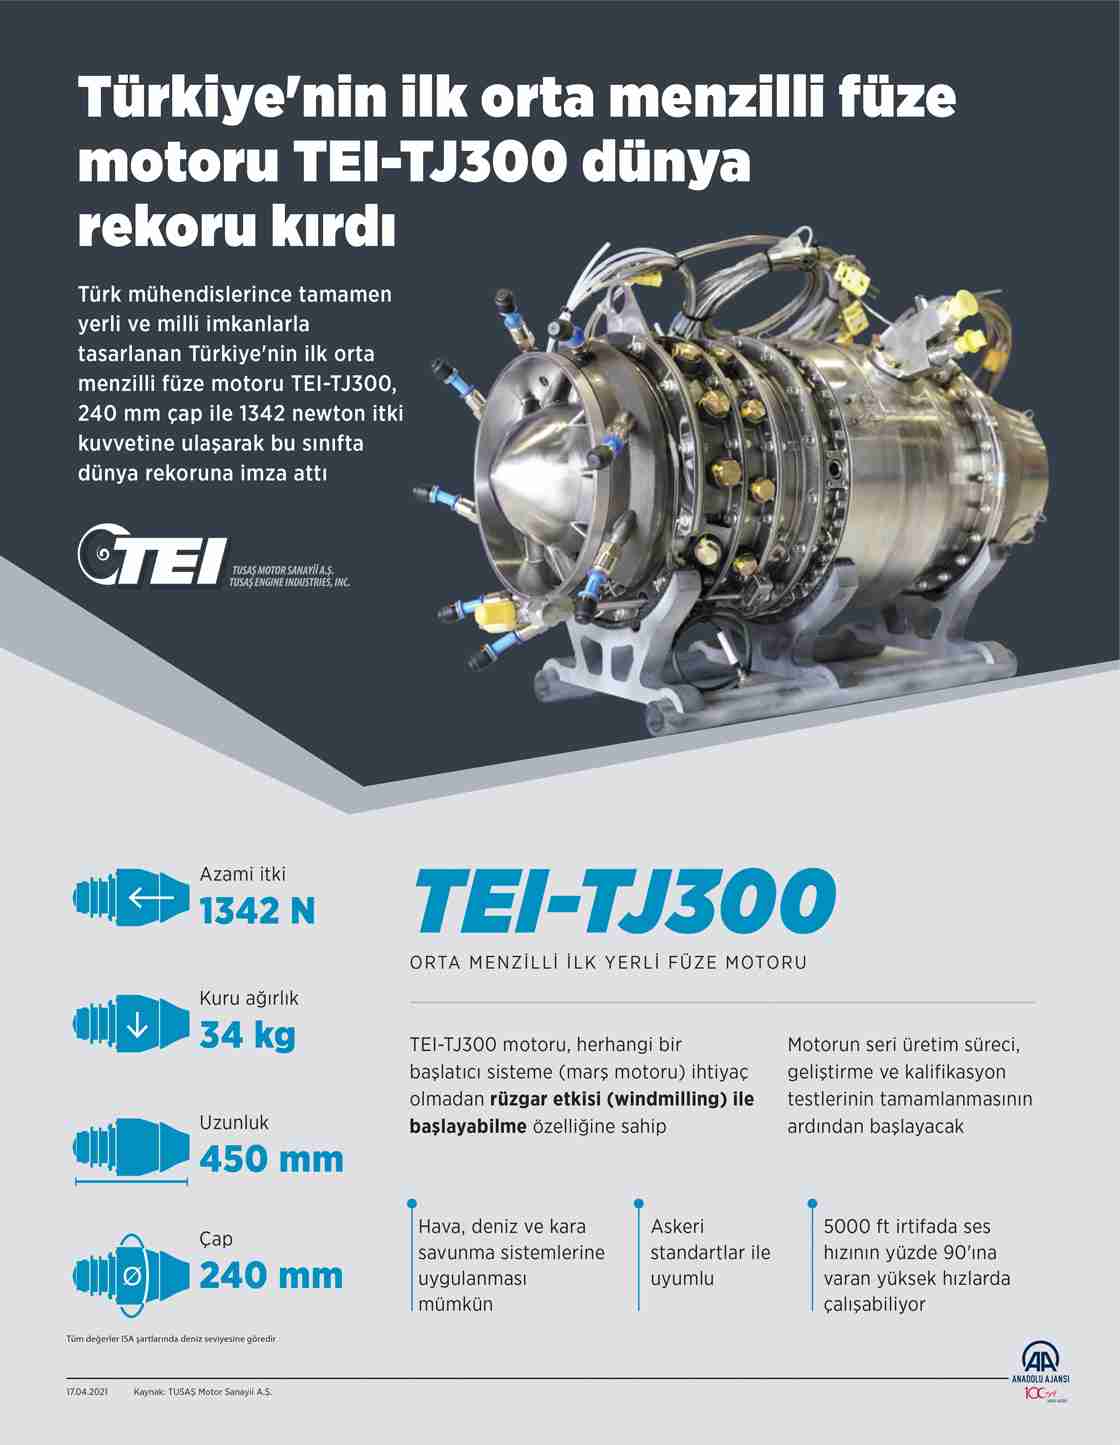 TEI-TJ300 dünya rekoru kırdı